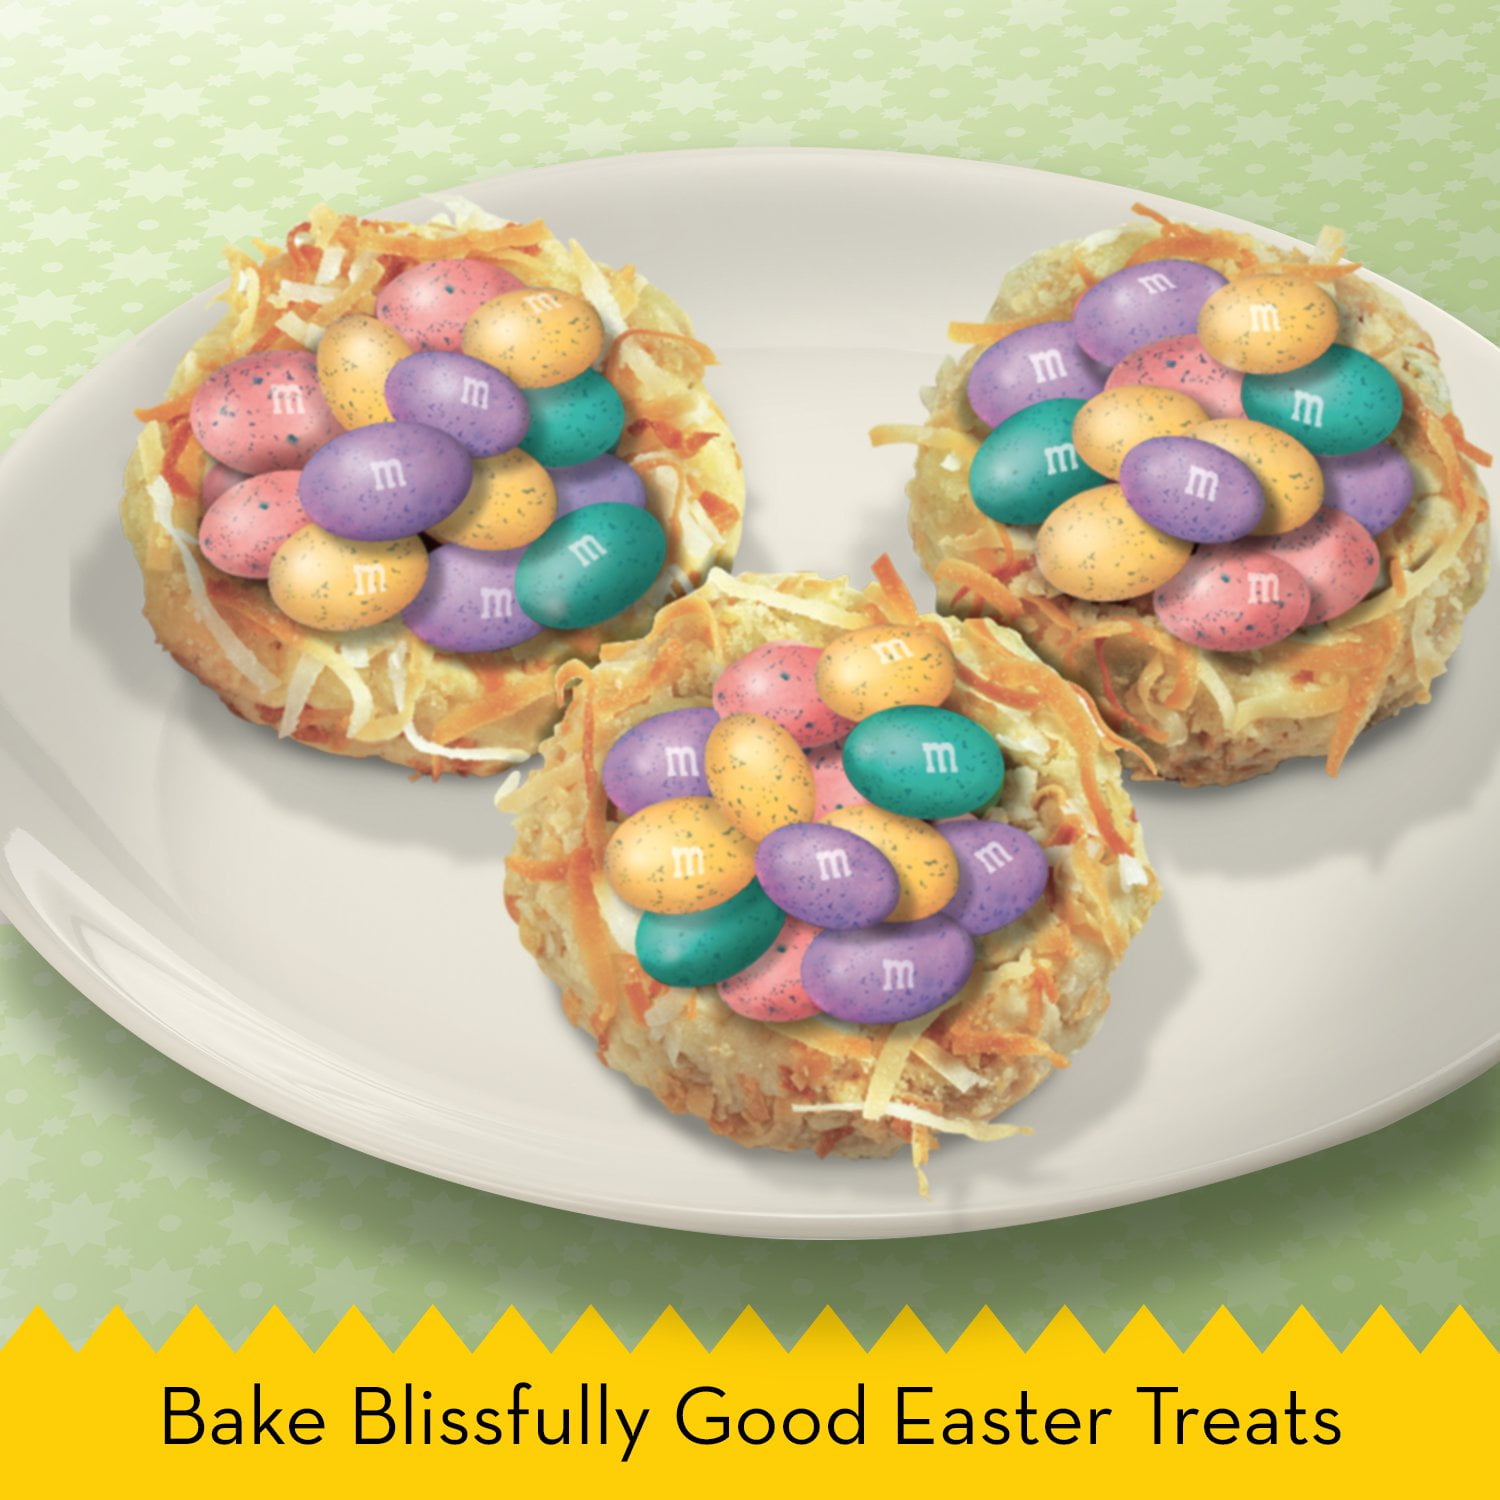 Buy M&M?s Crispy Chocolate Speckled Easter Egg Snack & Share Bag